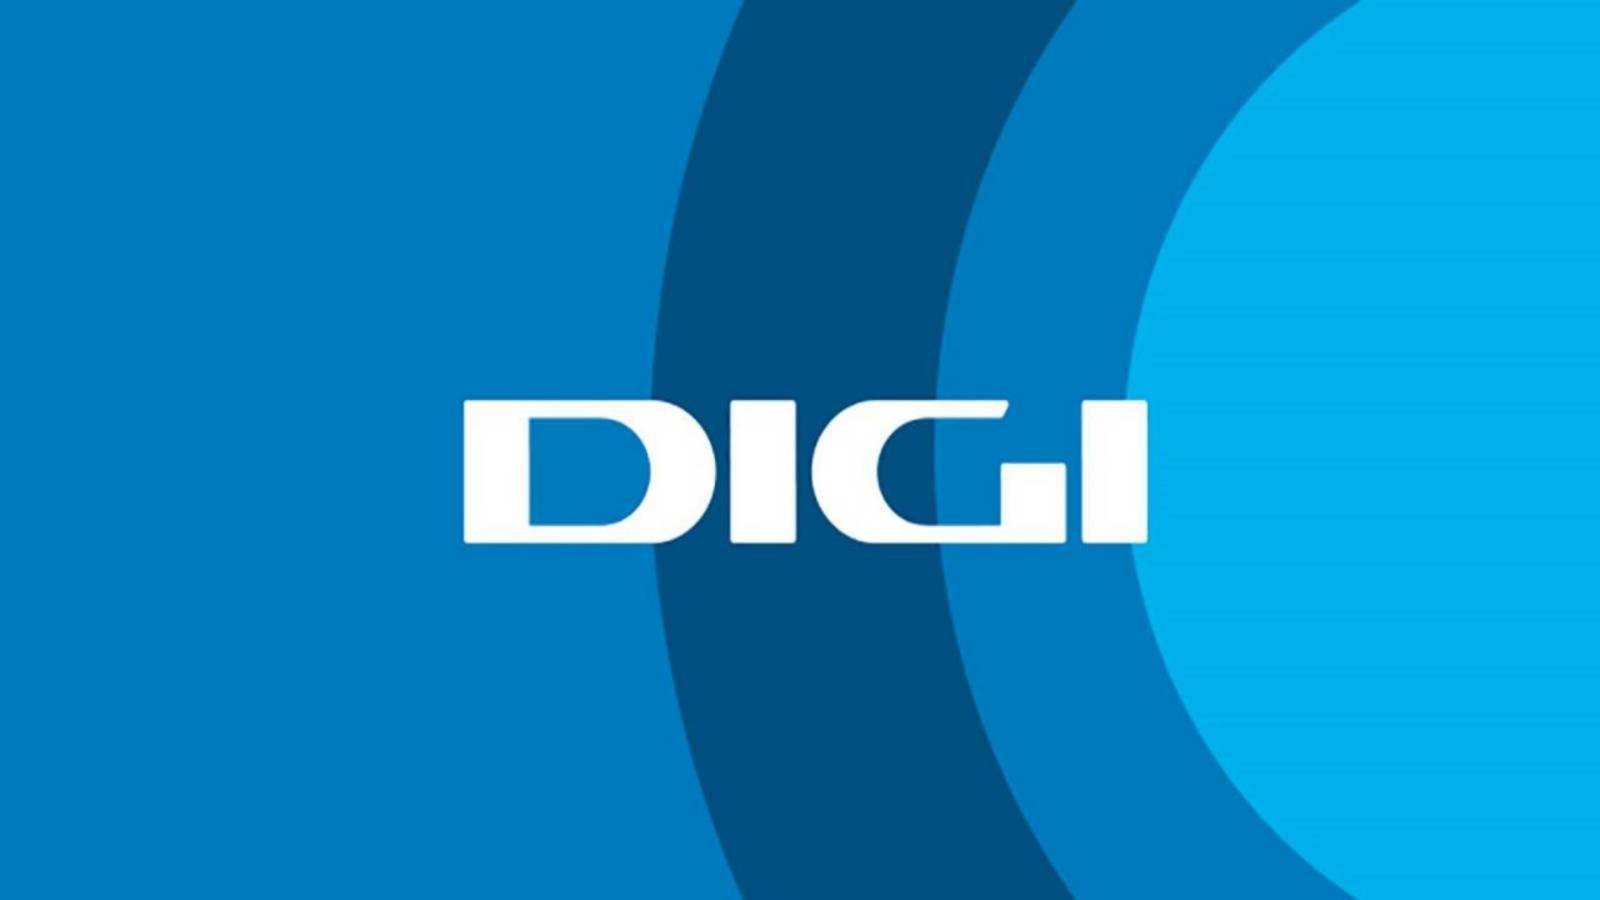 DIGI Romania Official Application IMPORTANT MILLIONS of Romanians